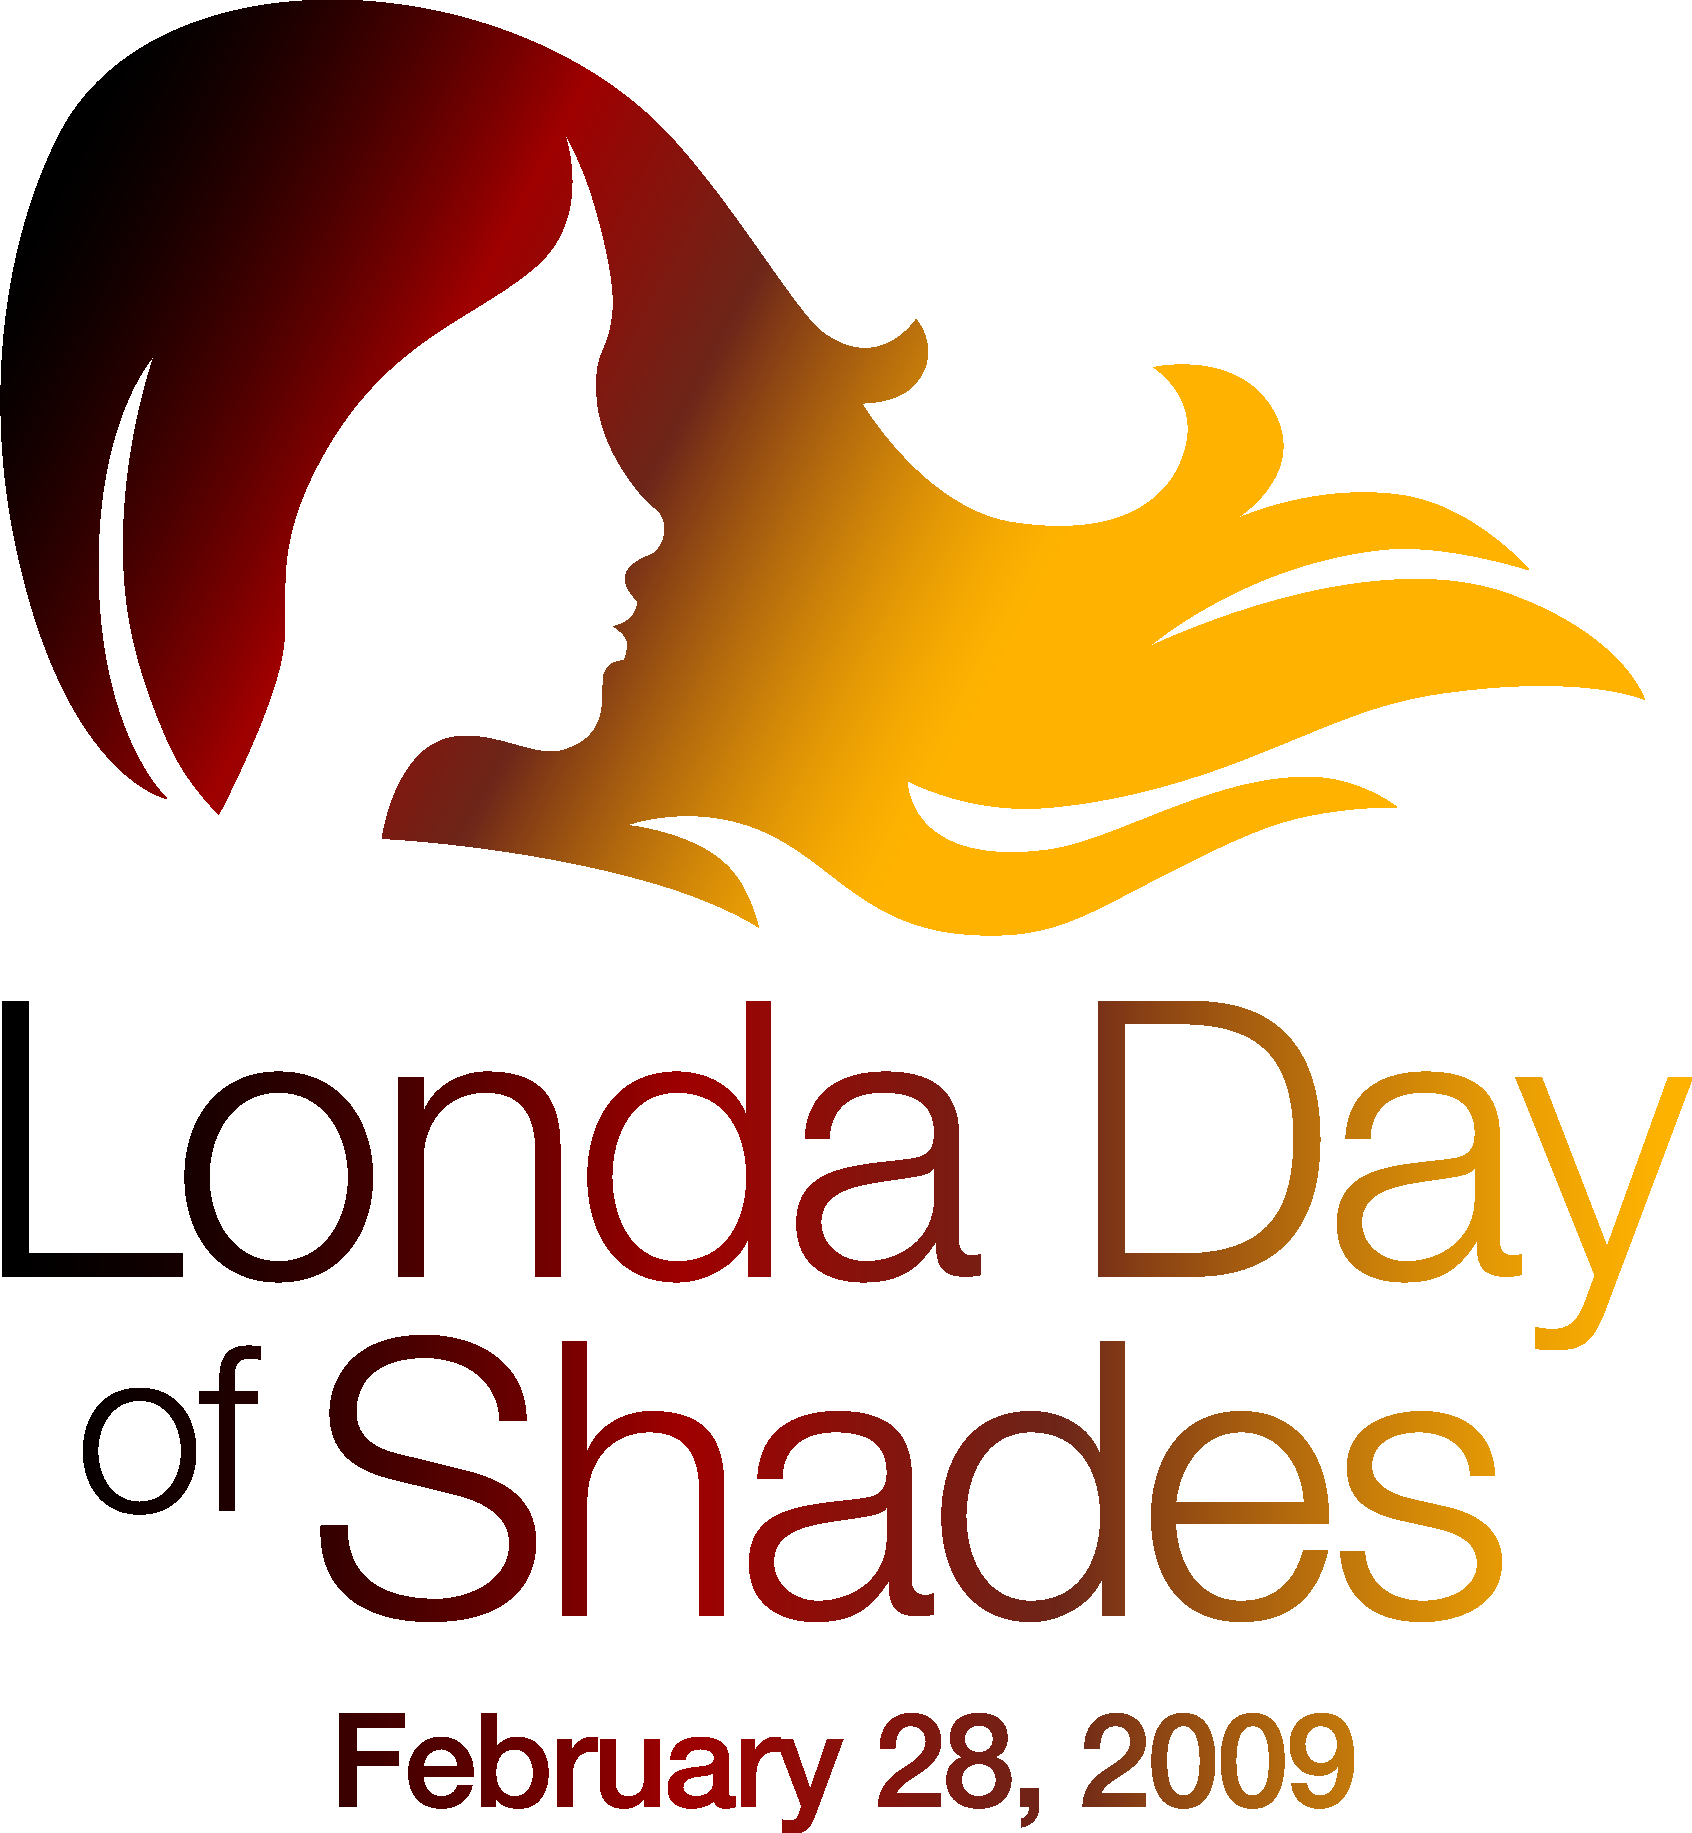 Londa Day of Shades Logo Vector